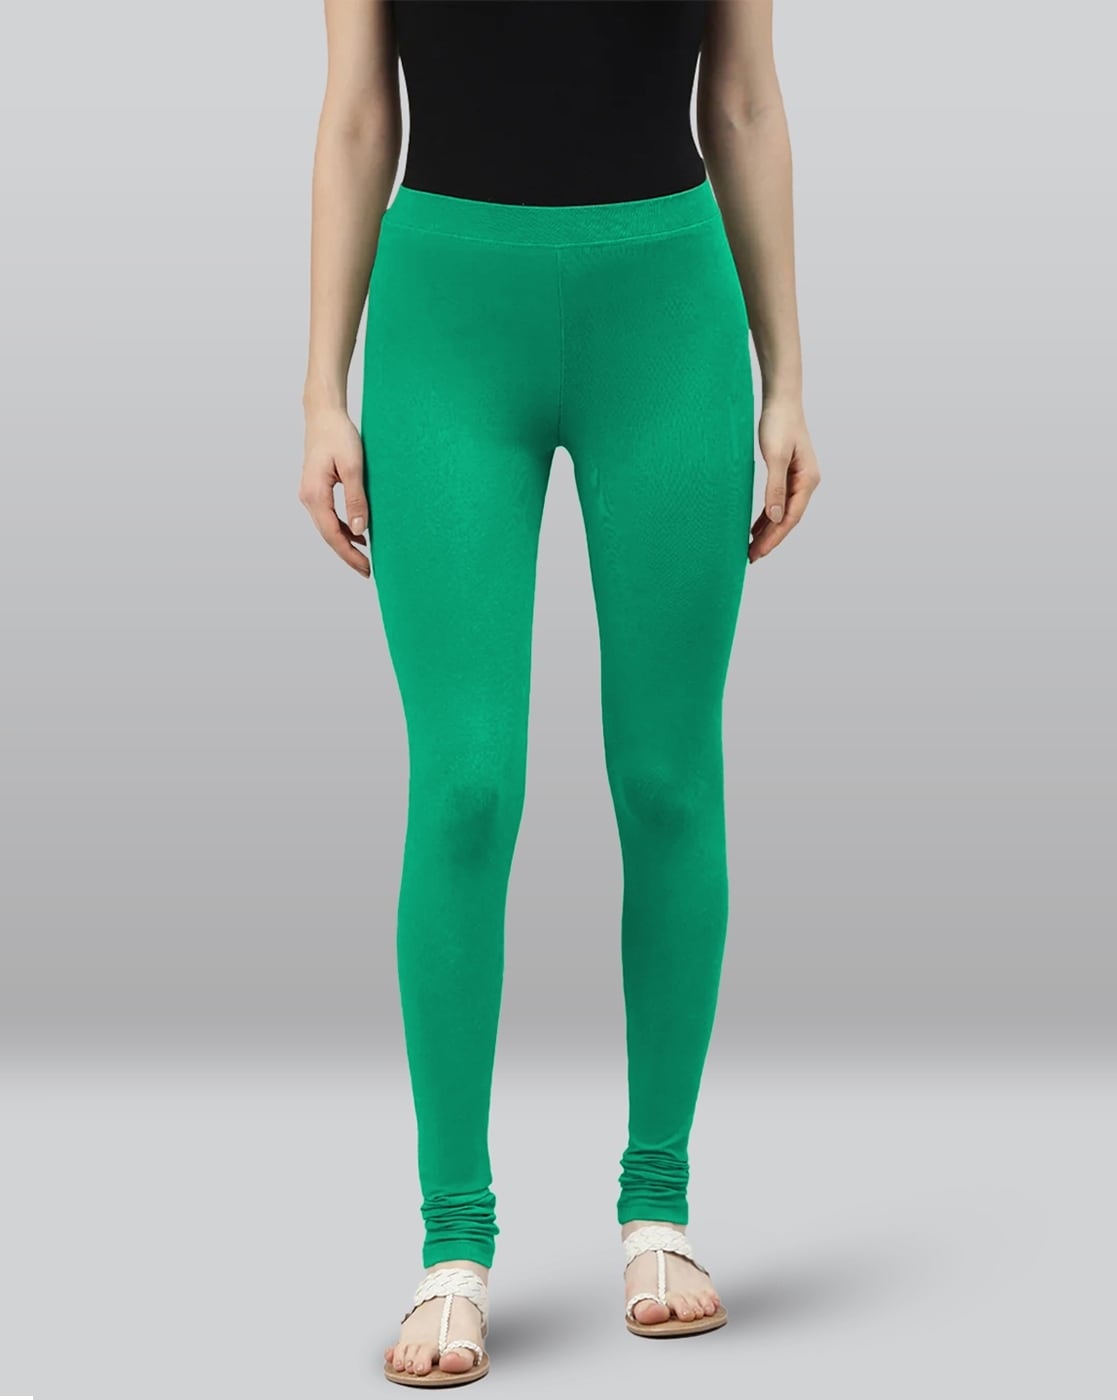 Collection more than 108 sea green leggings